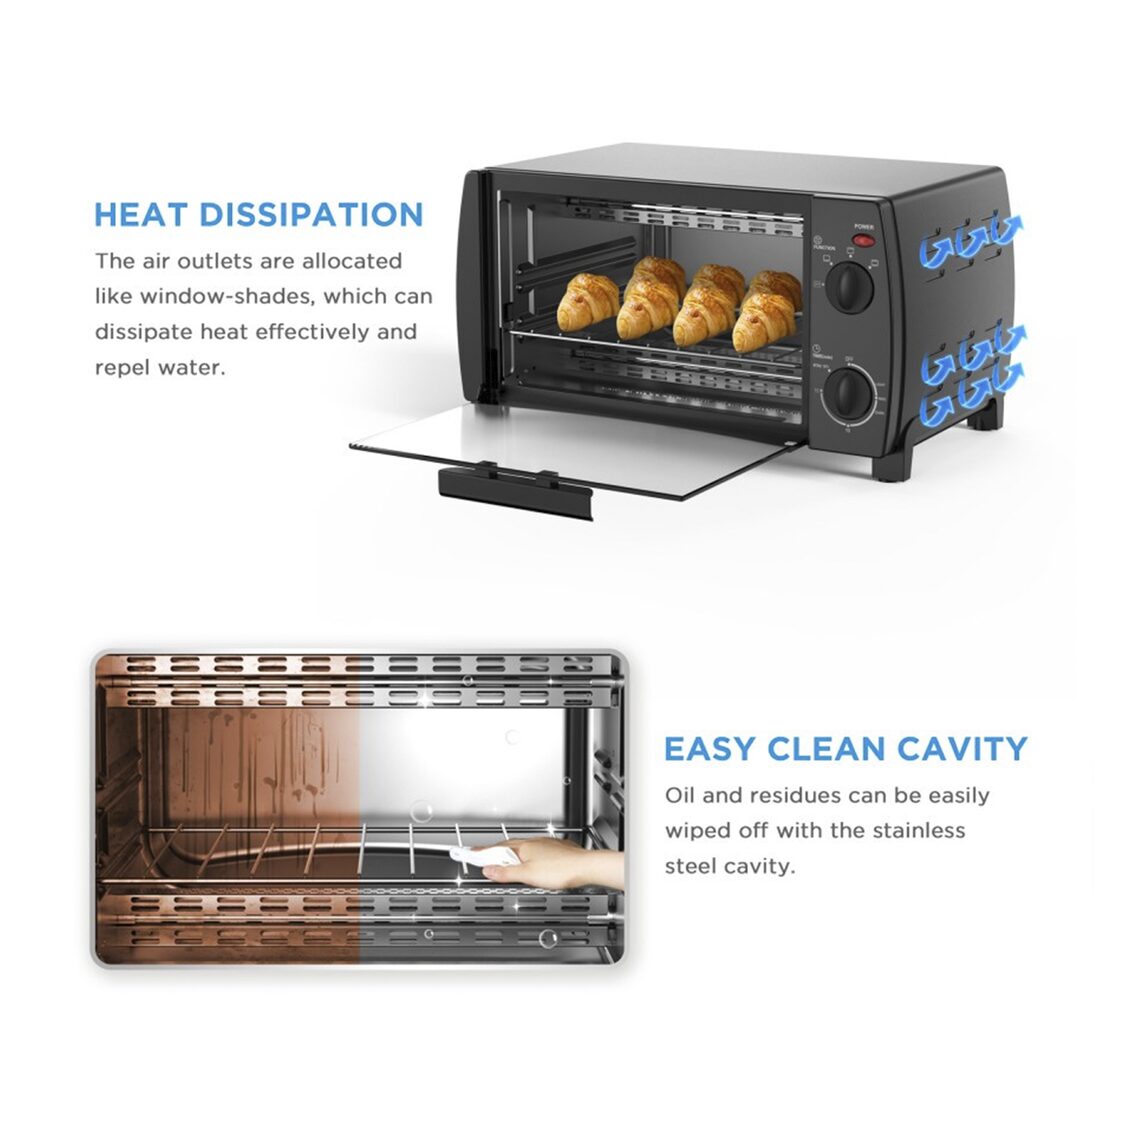 Comparison Of Hamilton Beach Air Fryer and Toshiba Air Fryer, by Elon  Klein